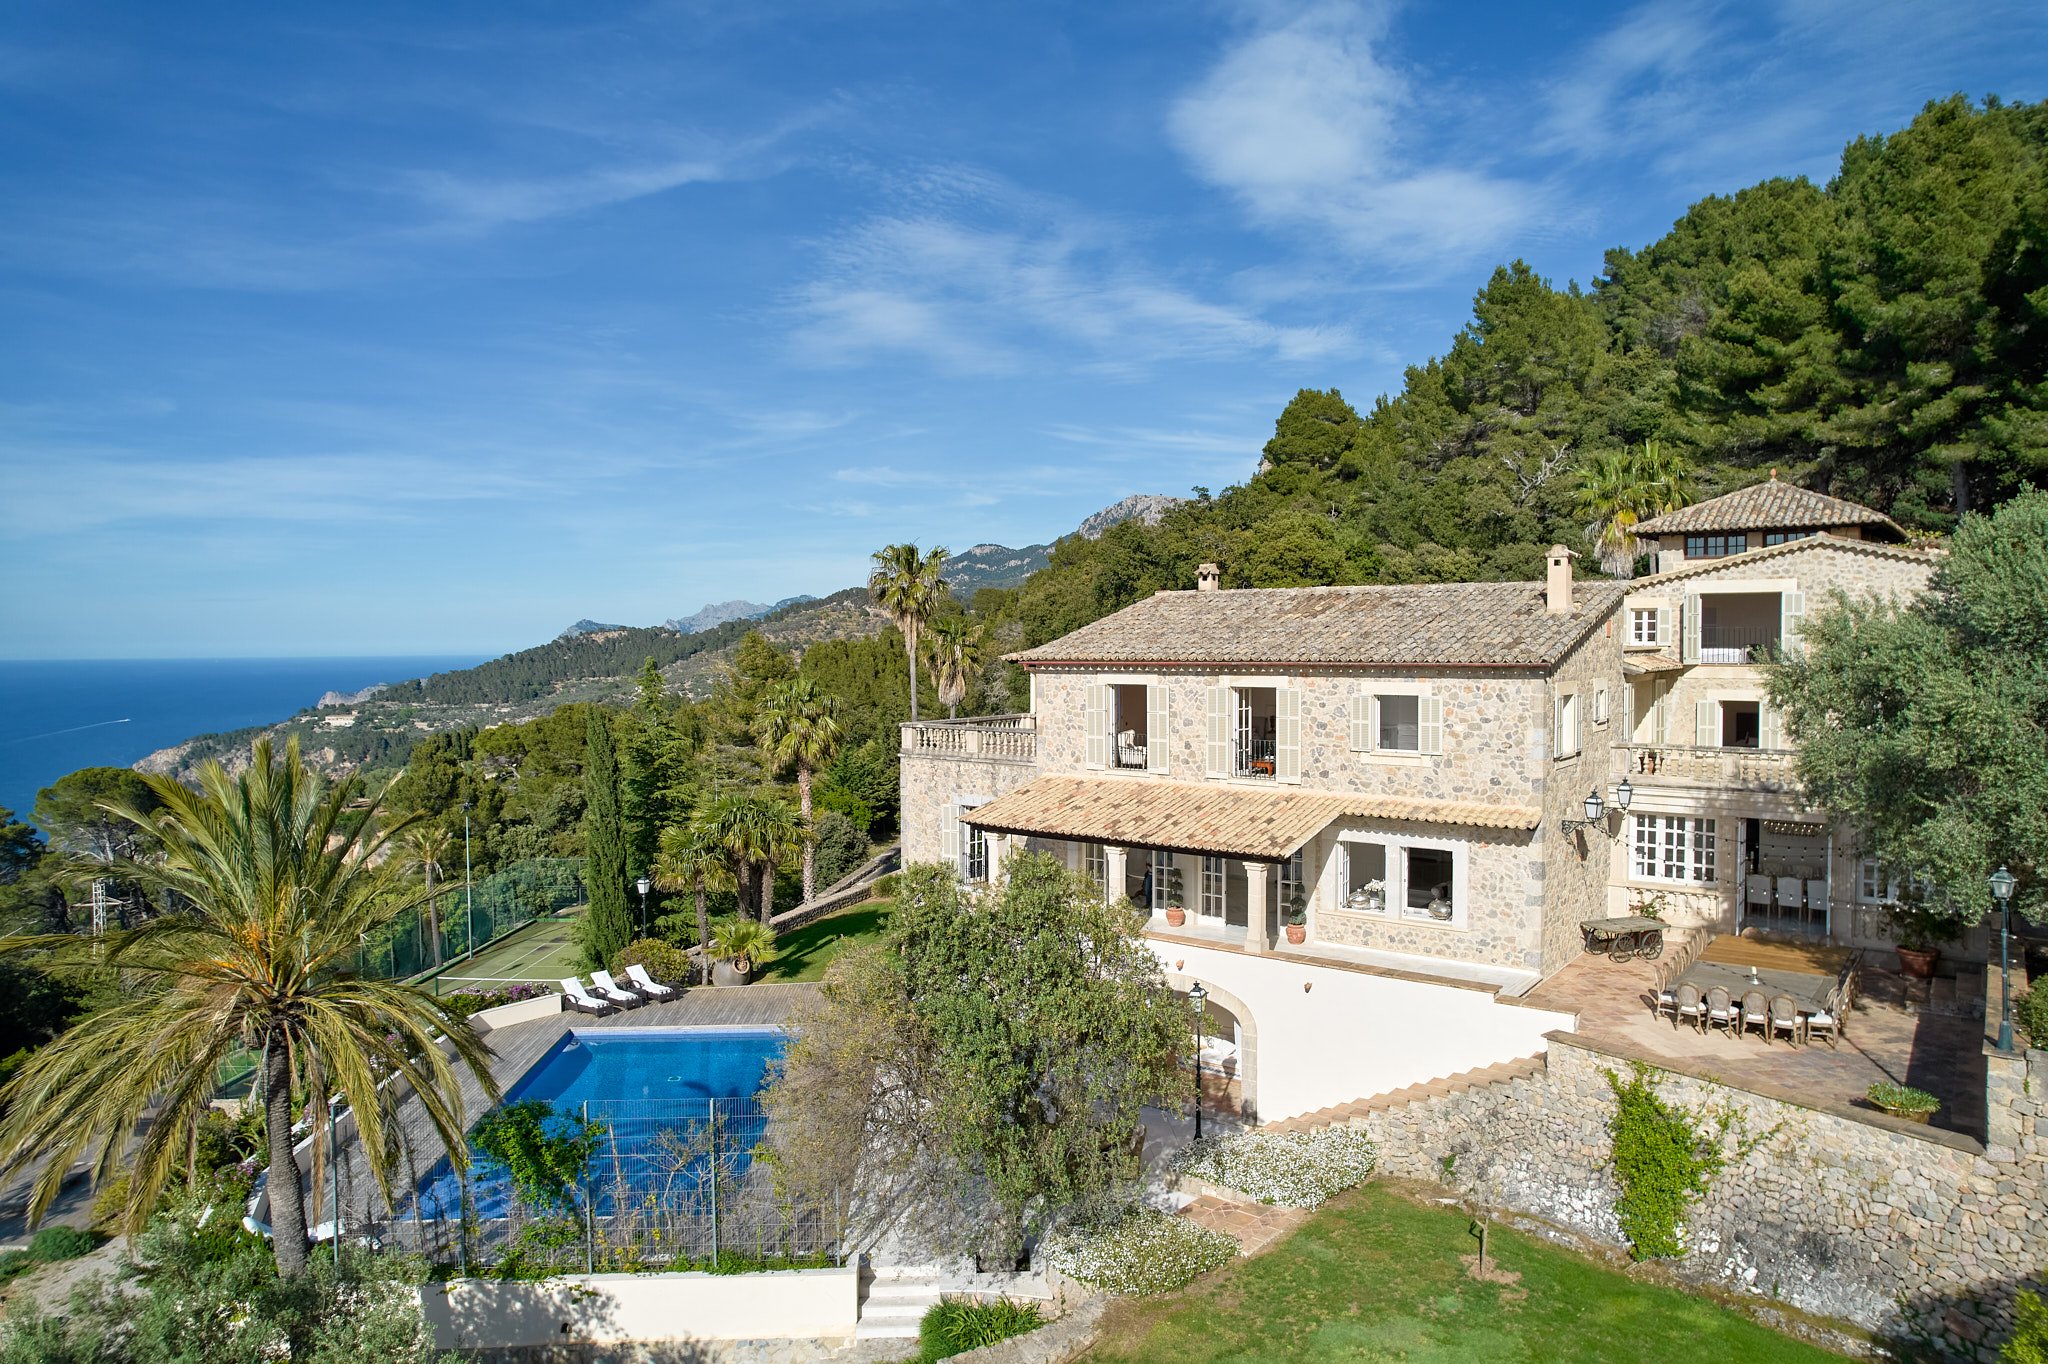 Francis York Can Calo: Historic Estate in Mallorca Built by Archduke Luis Salvador of Habsburg 59.jpg